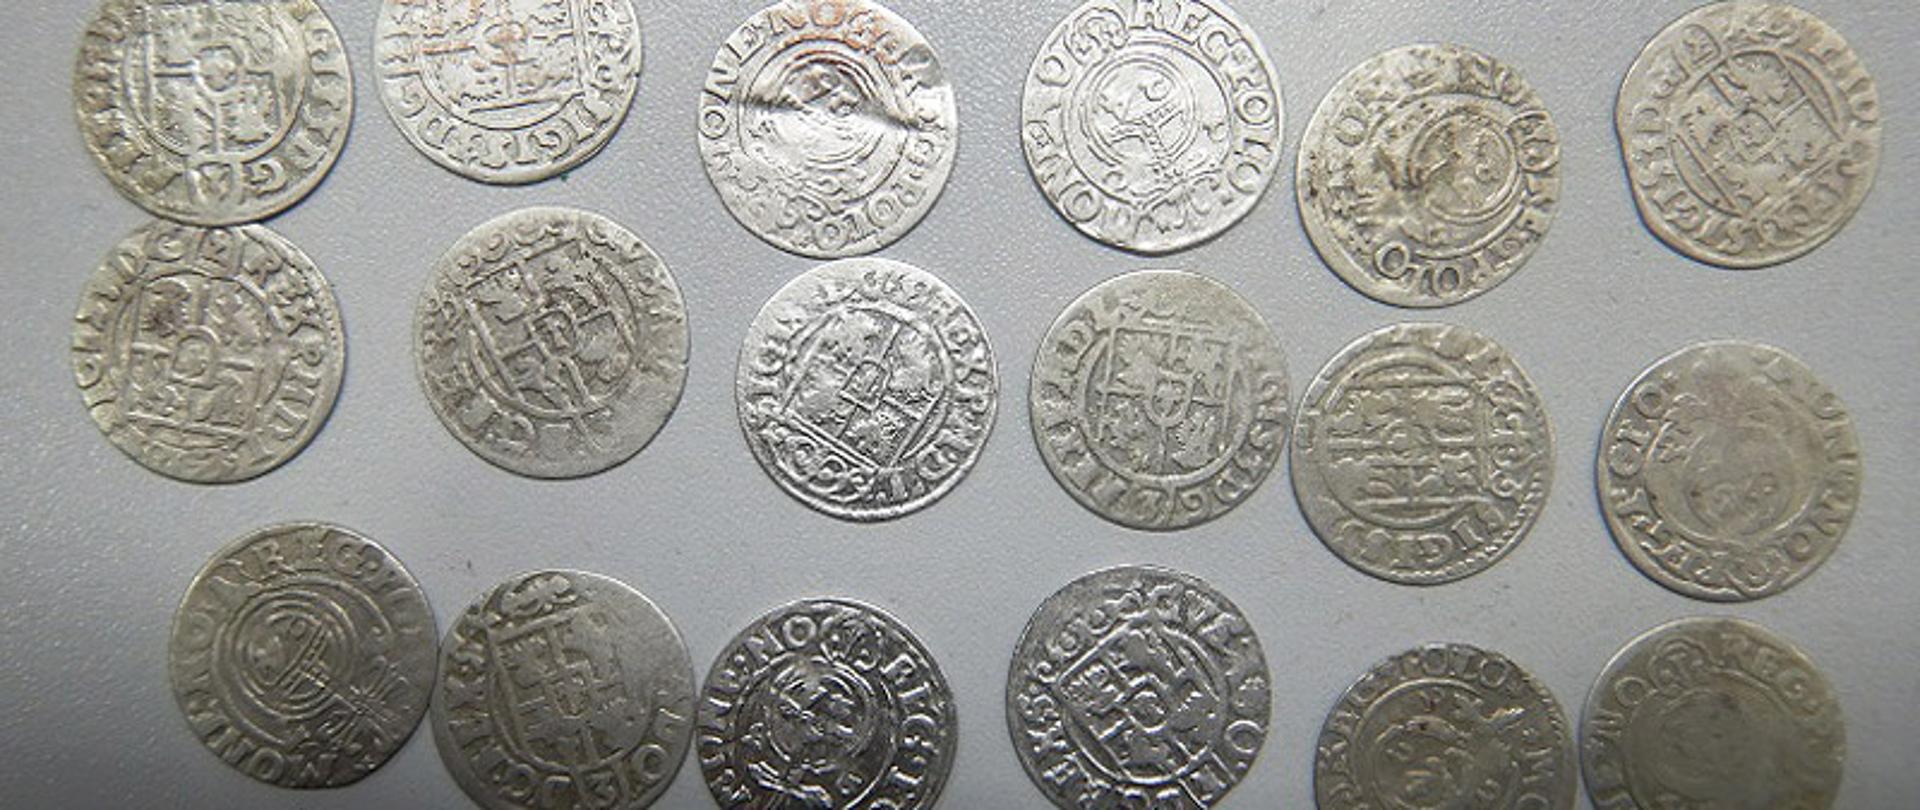 Srebrne monety ułożone obok siebie.